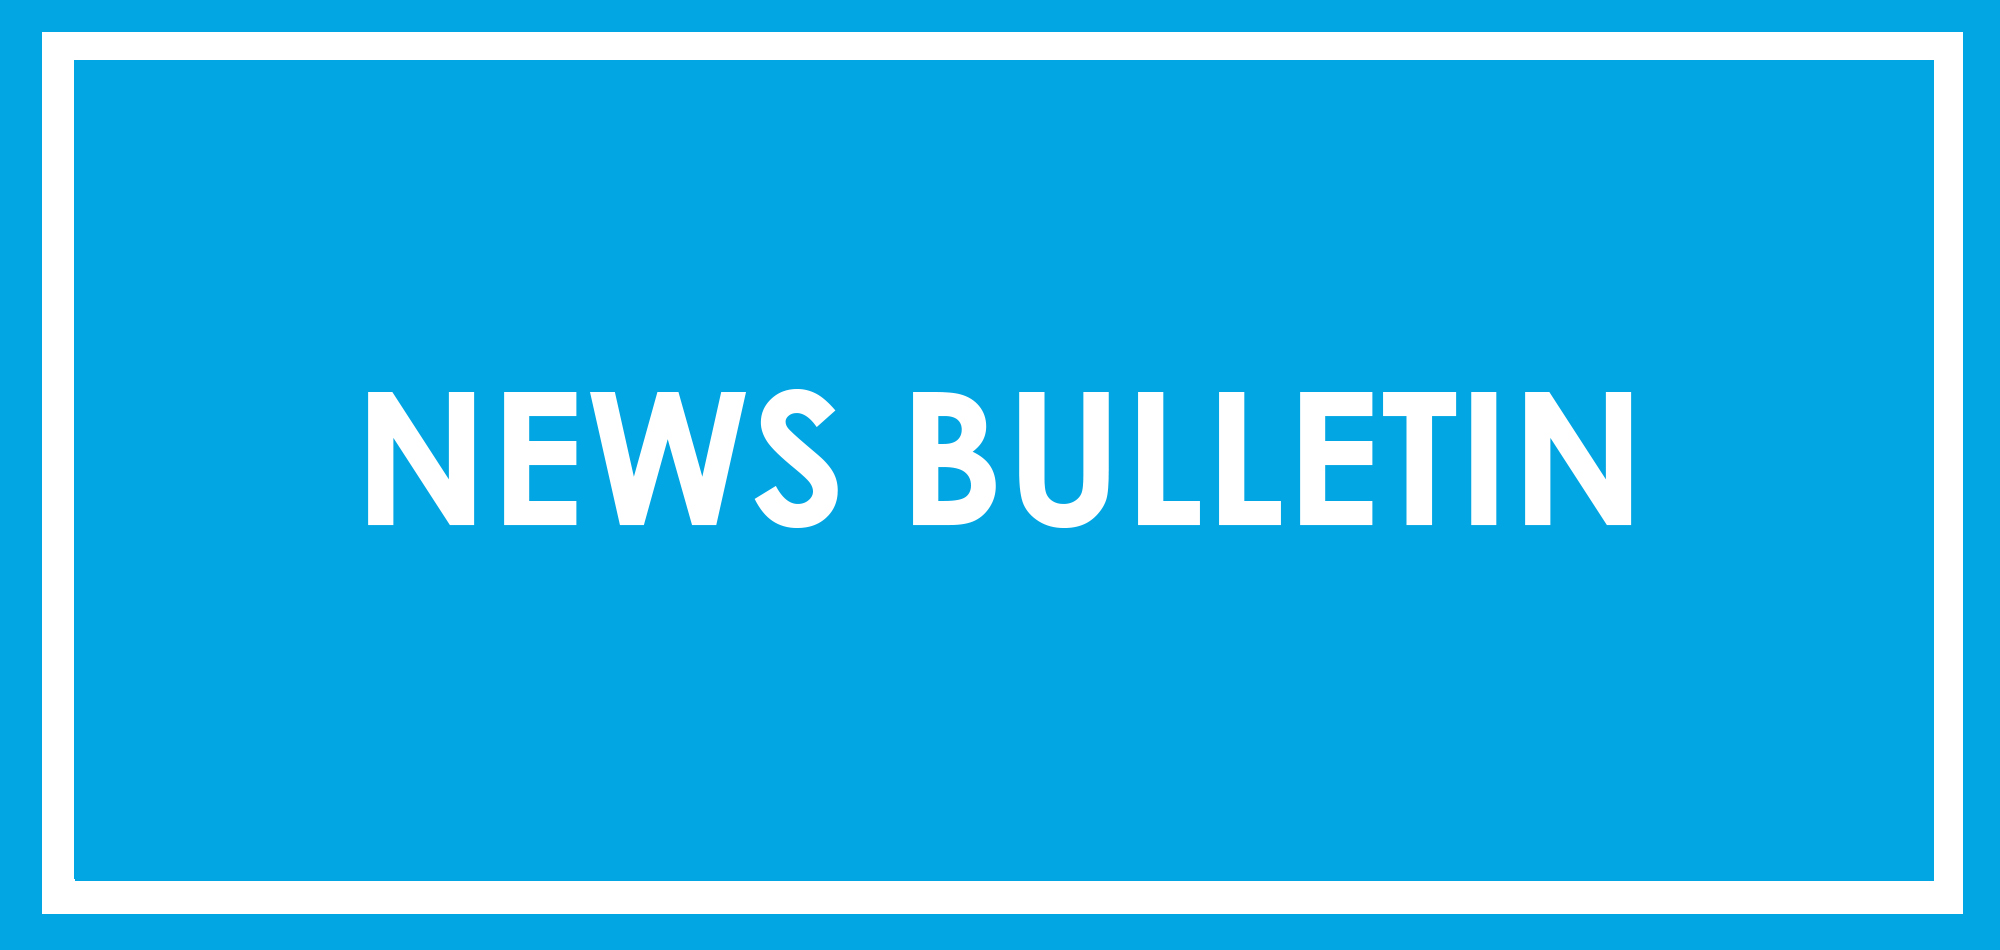 News Bulletin - 16.06.21